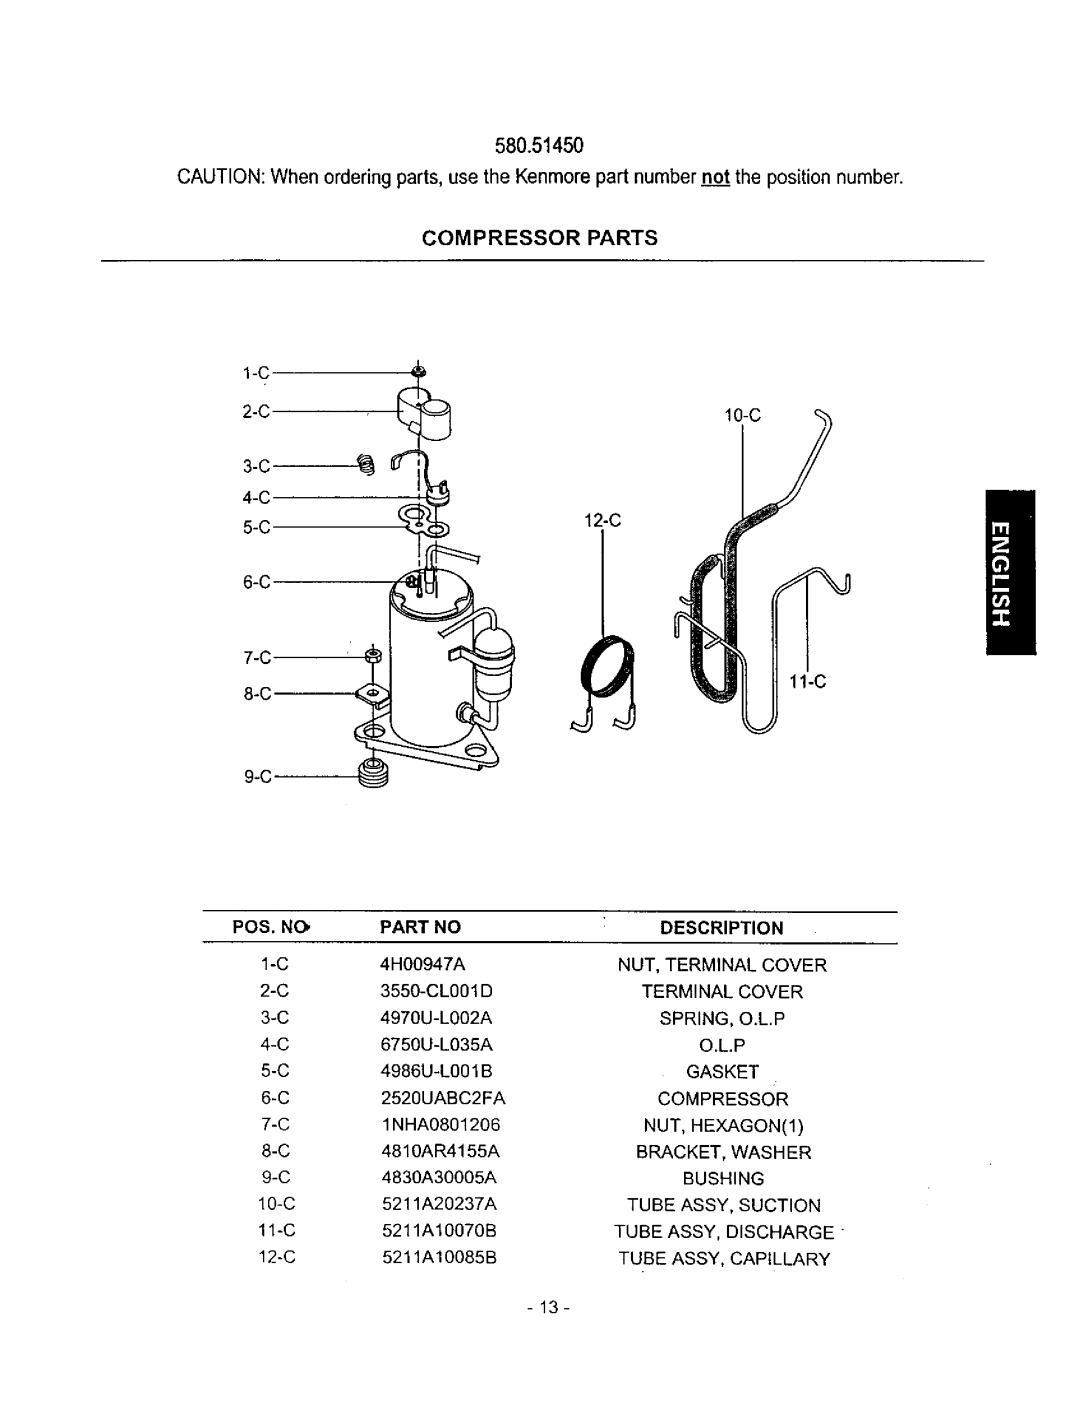 Kenmore owner manual 580.51450, Compressor Parts 